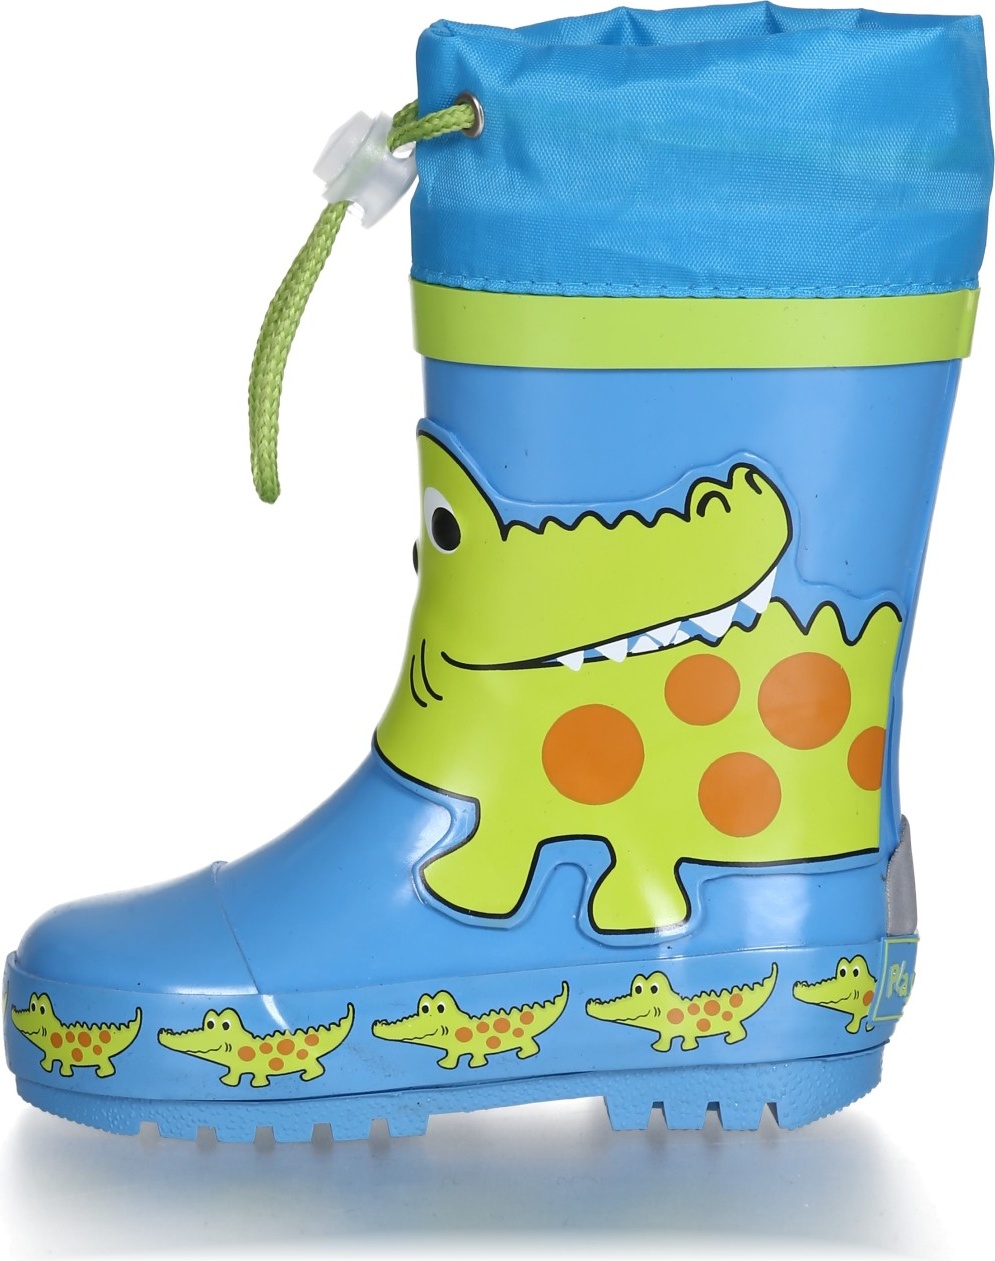 Playshoes Kinder Gummistiefel Krokodil Blau/Grün | Rubber boots | Shoes ...